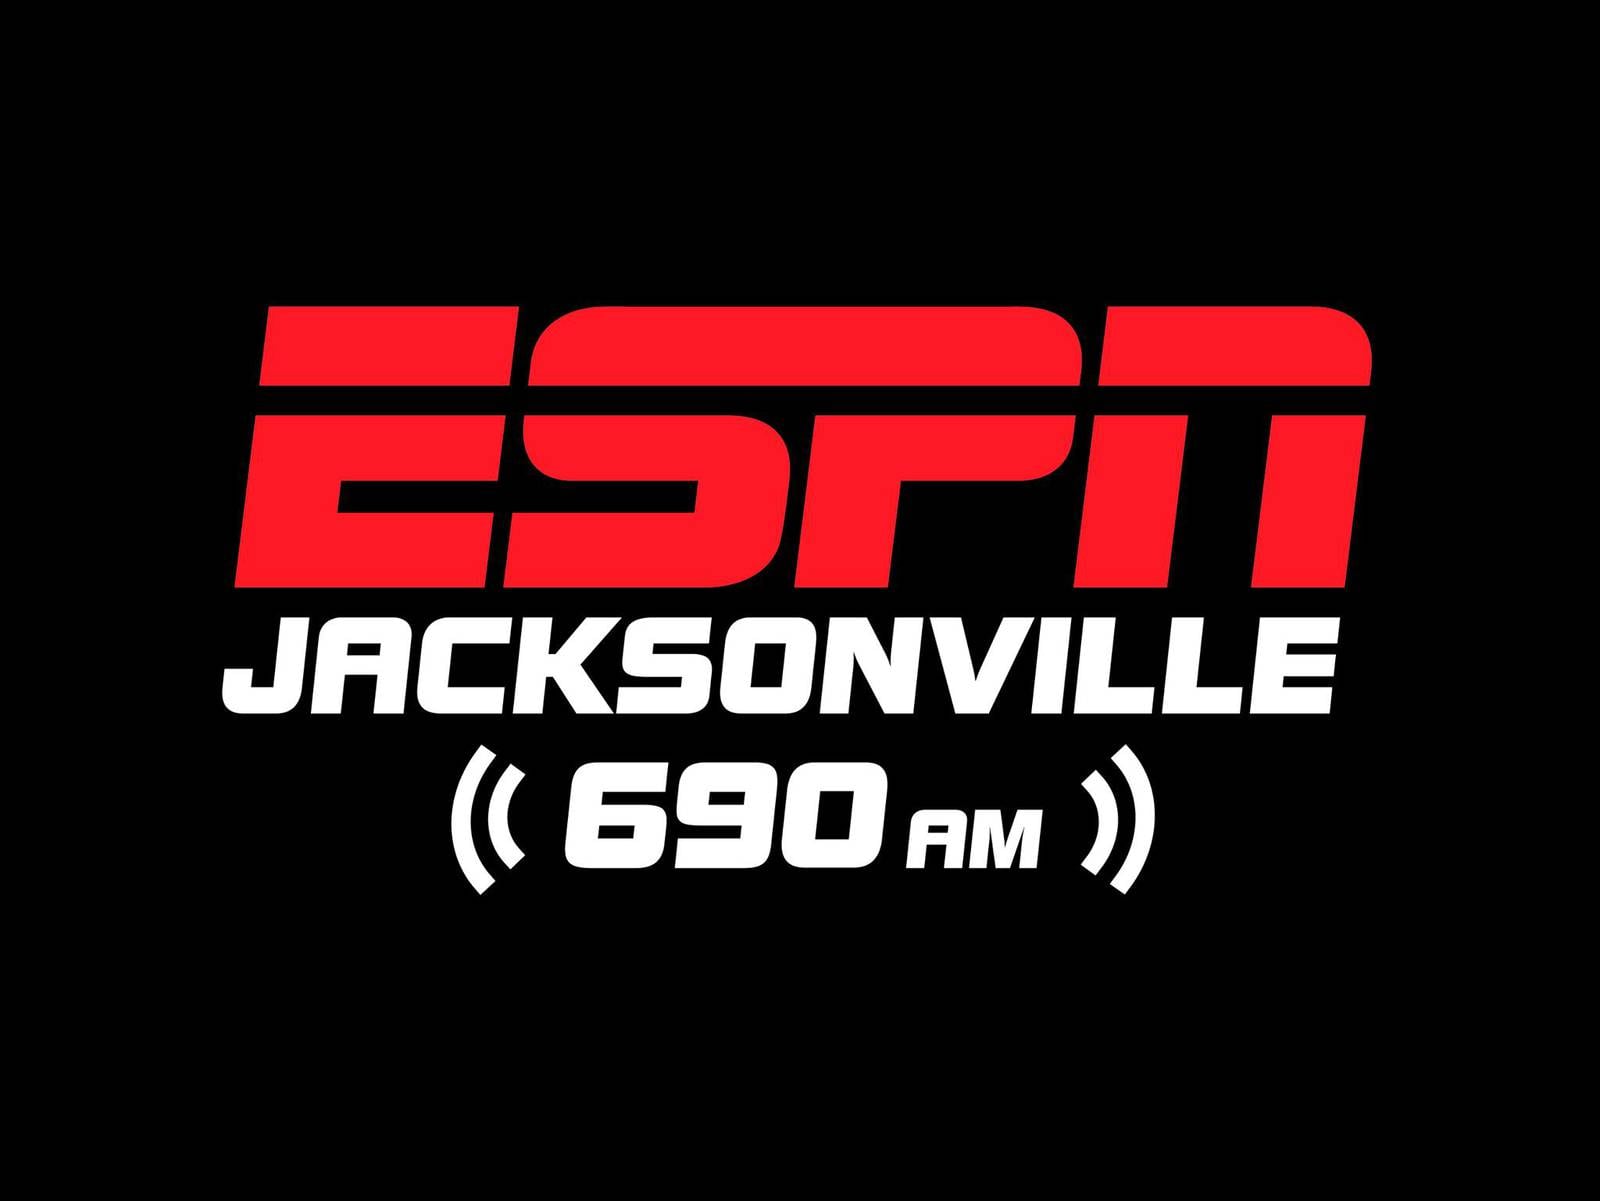 ESPN Radio has a new home on 690AM! 104.5 WOKV